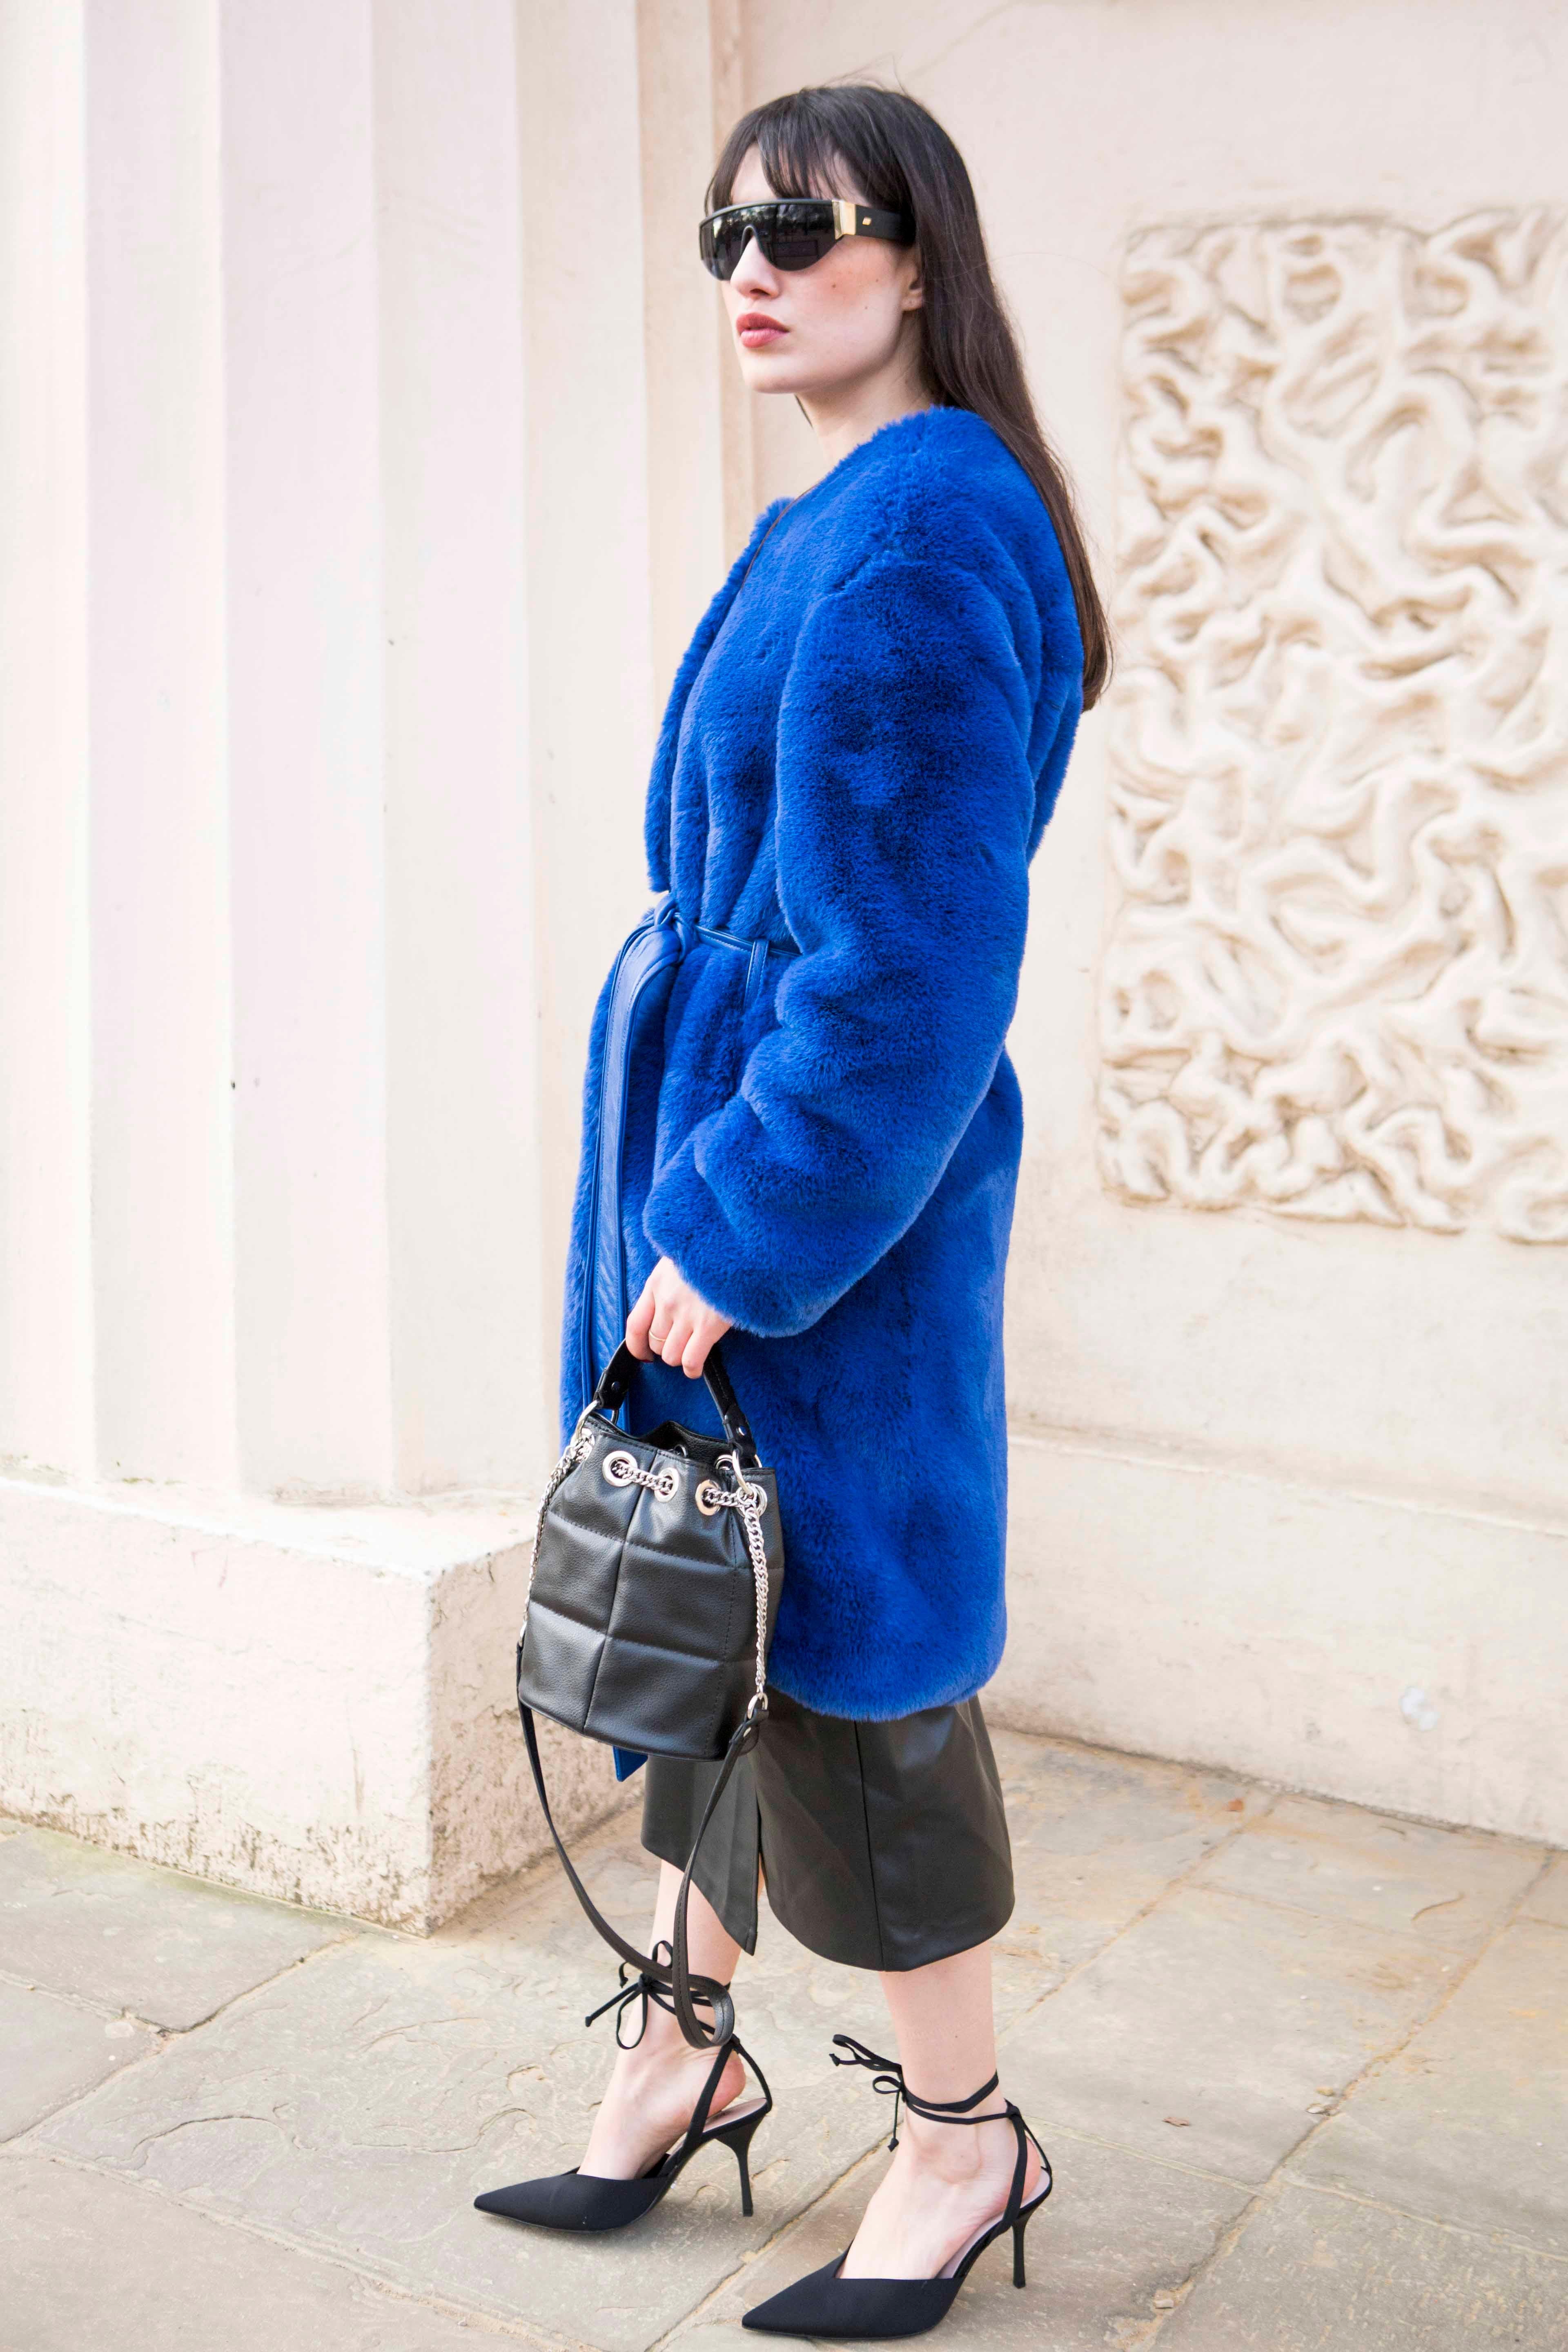 Verheyen London Serena  Collarless Faux Fur Coat in Blue - Size uk 6  For Sale 2